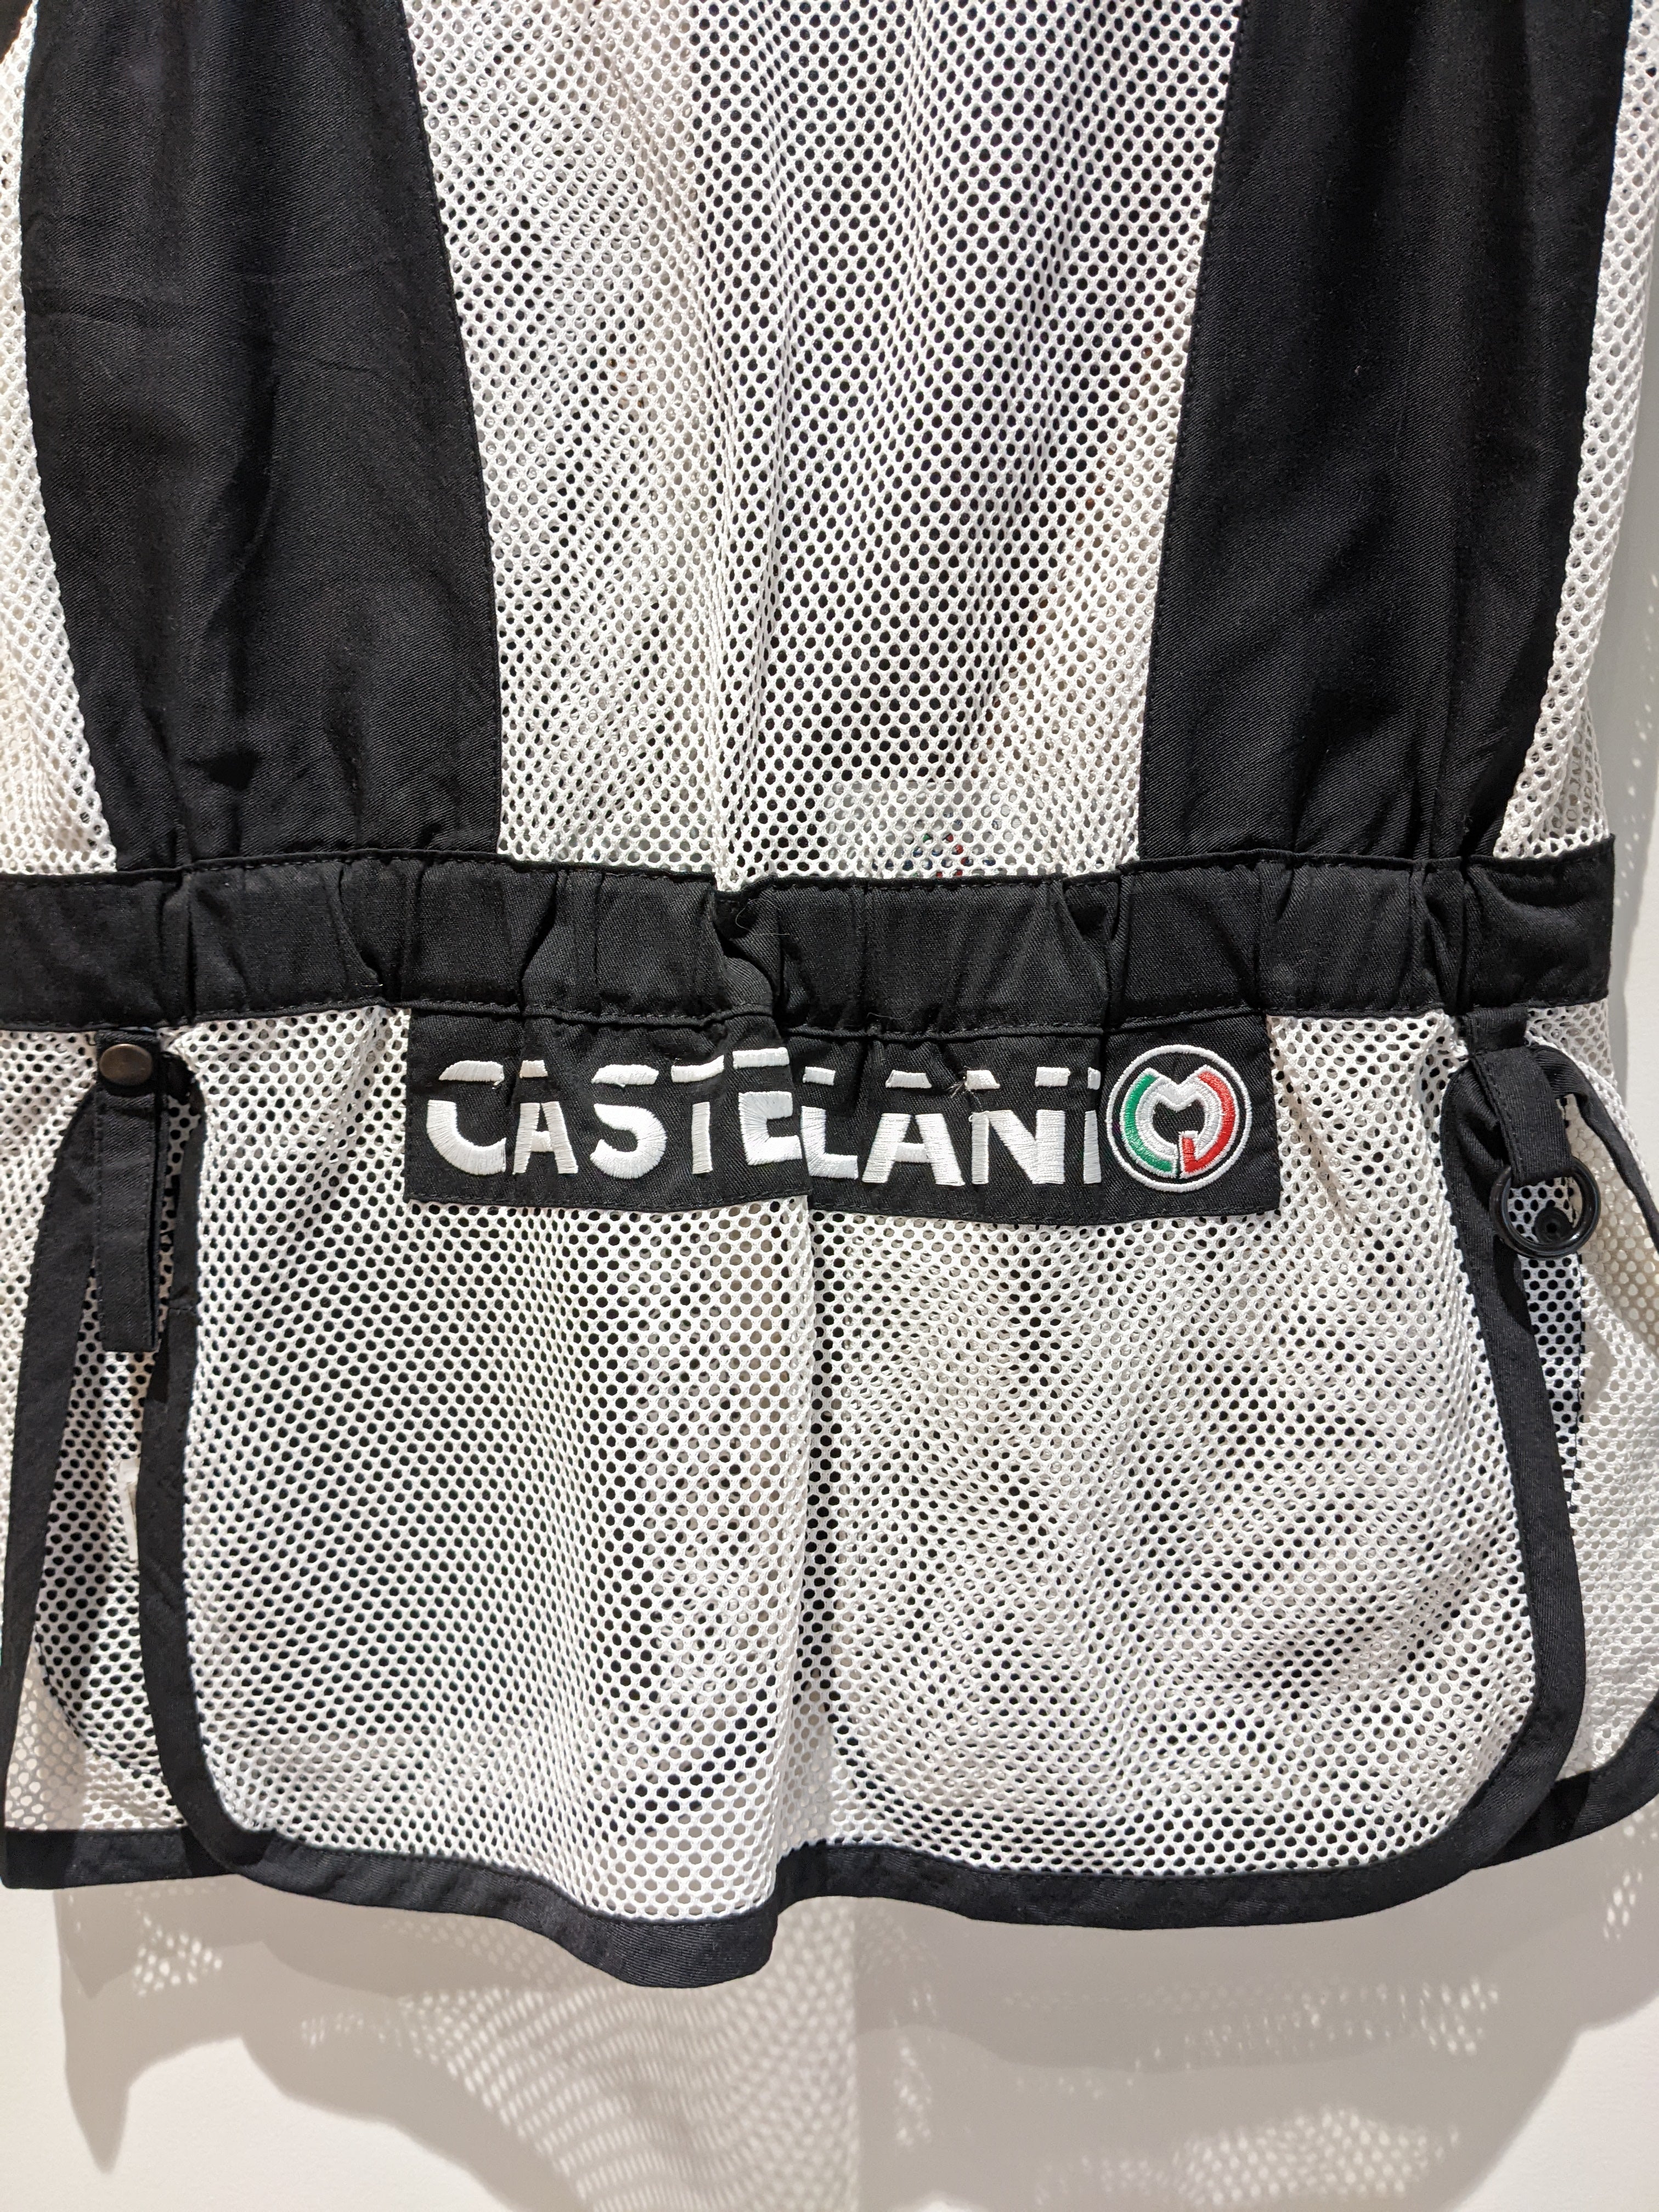 Castellani London Sporting Mesh Vest